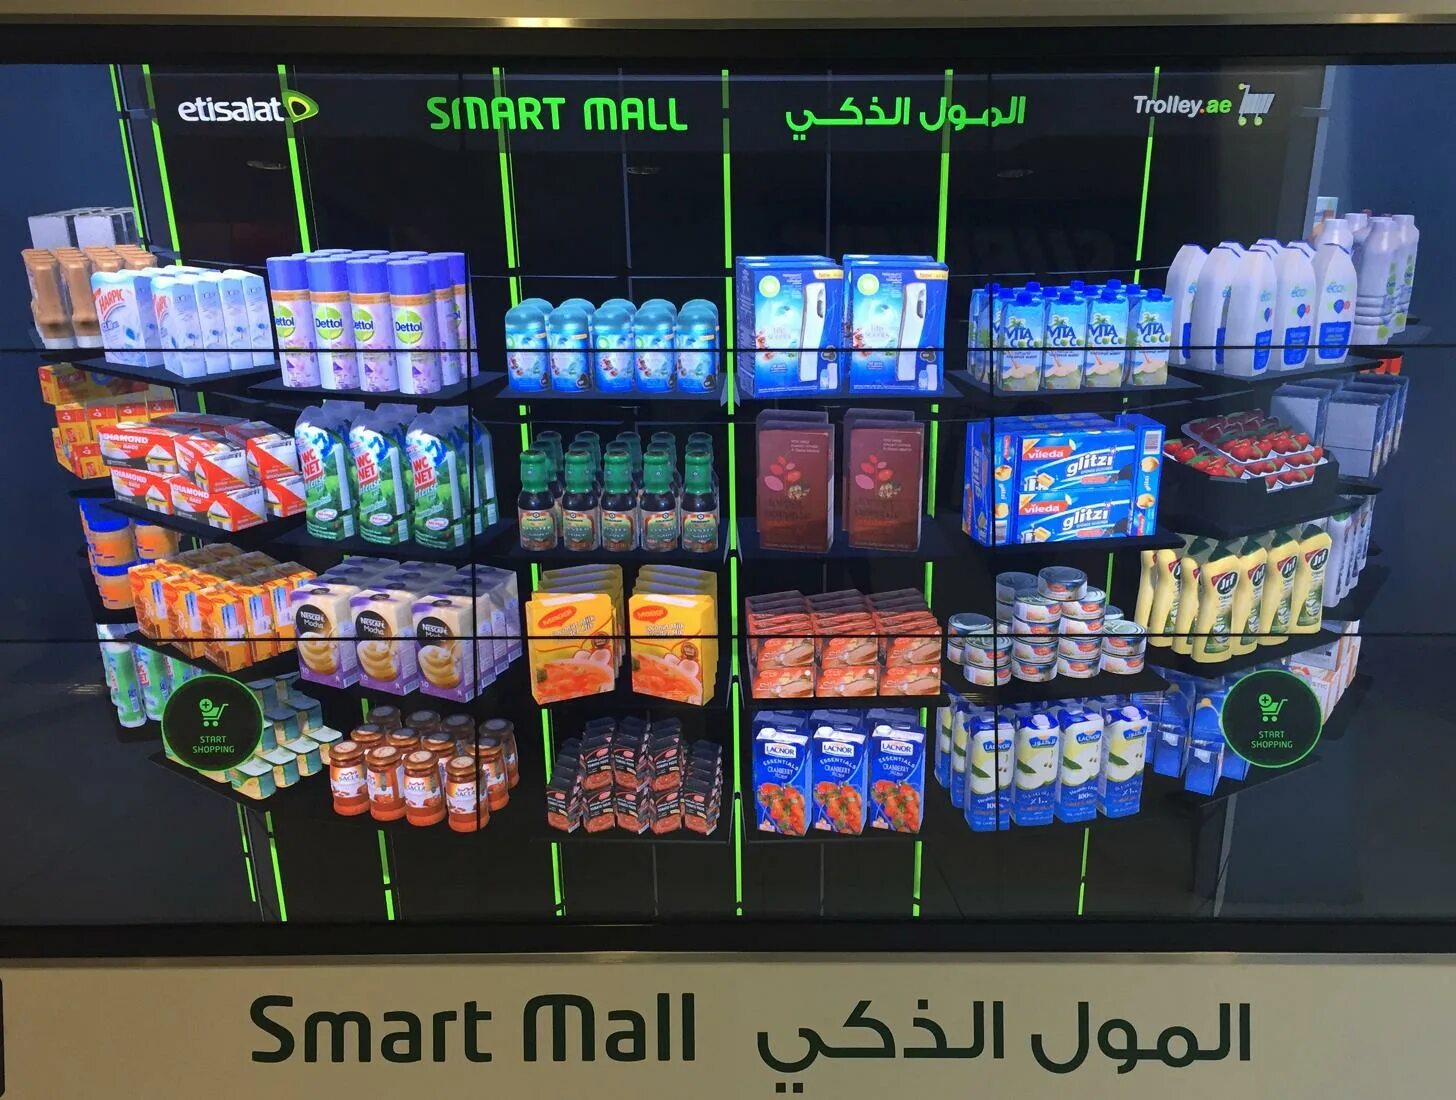 Experience shop. Смарт магазин. Умный магазин. Etisalat Dubai Mall. Dubai Trolley.